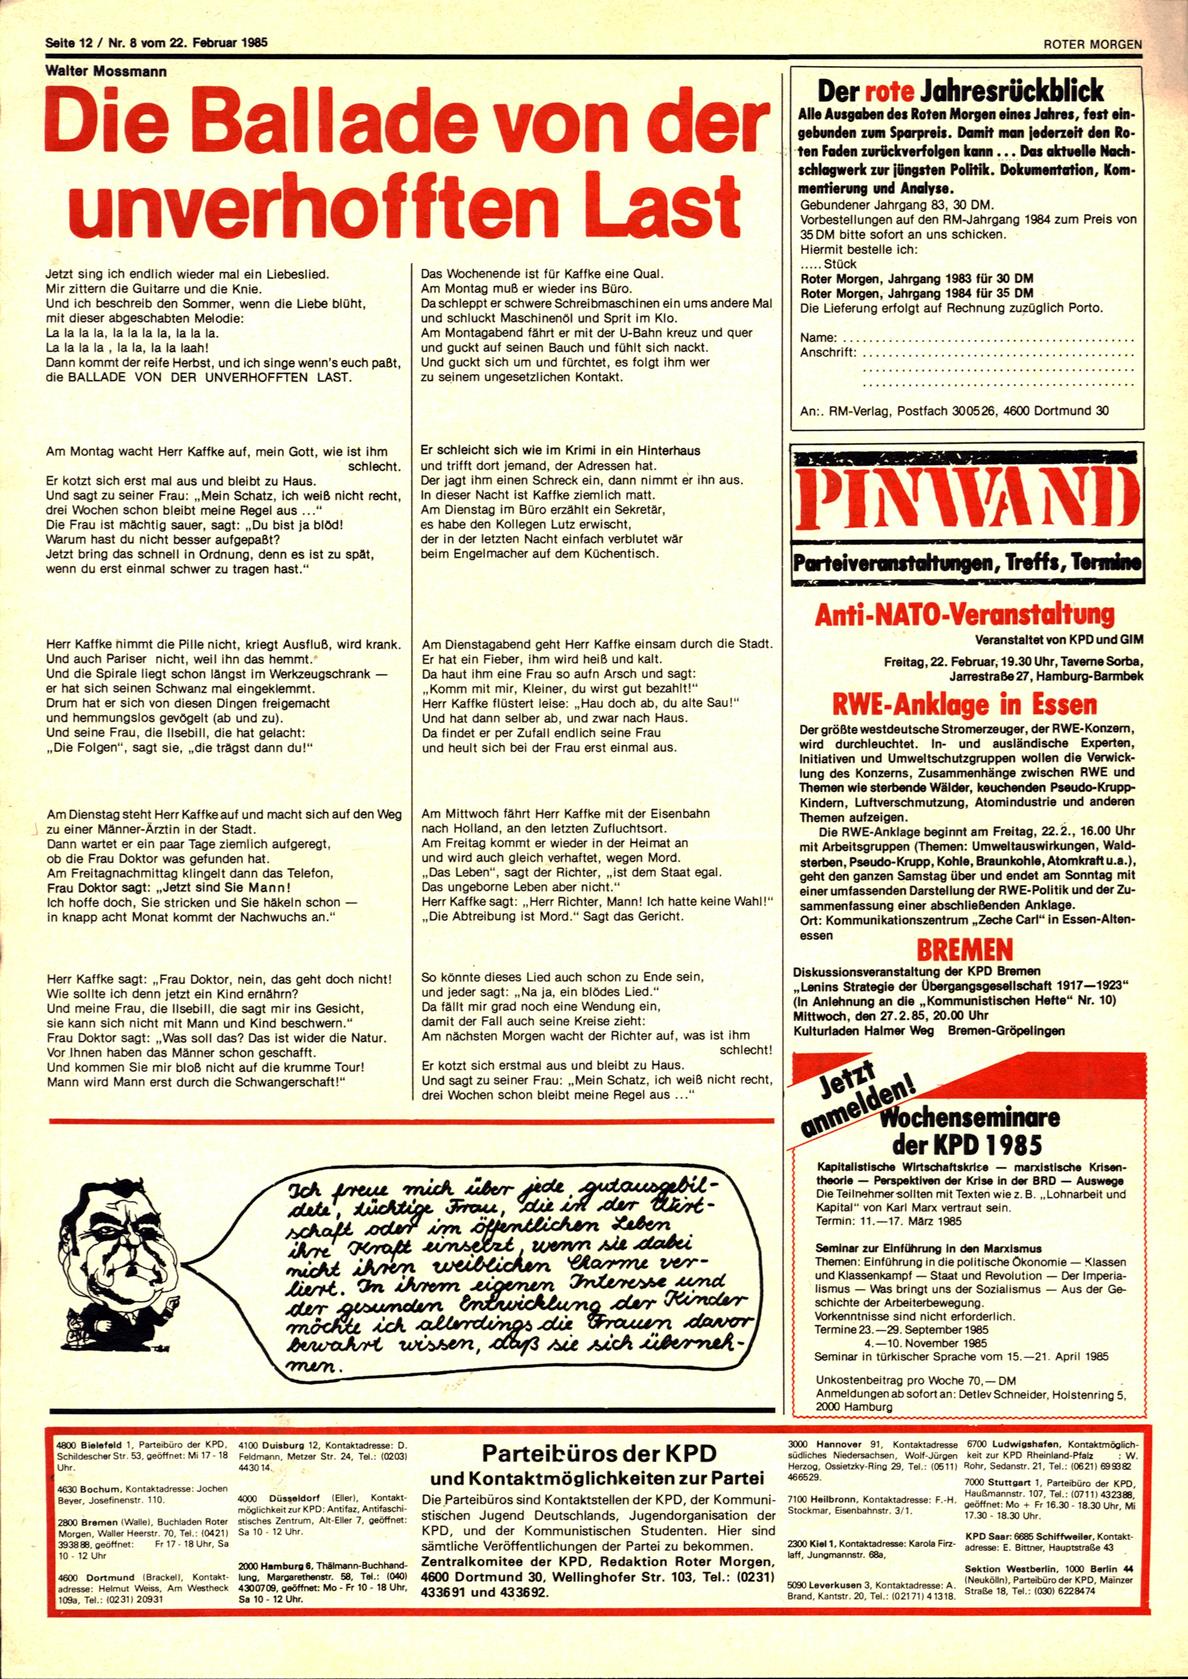 Roter Morgen, 19. Jg., 22. Februar 1985, Nr. 8, Seite 12